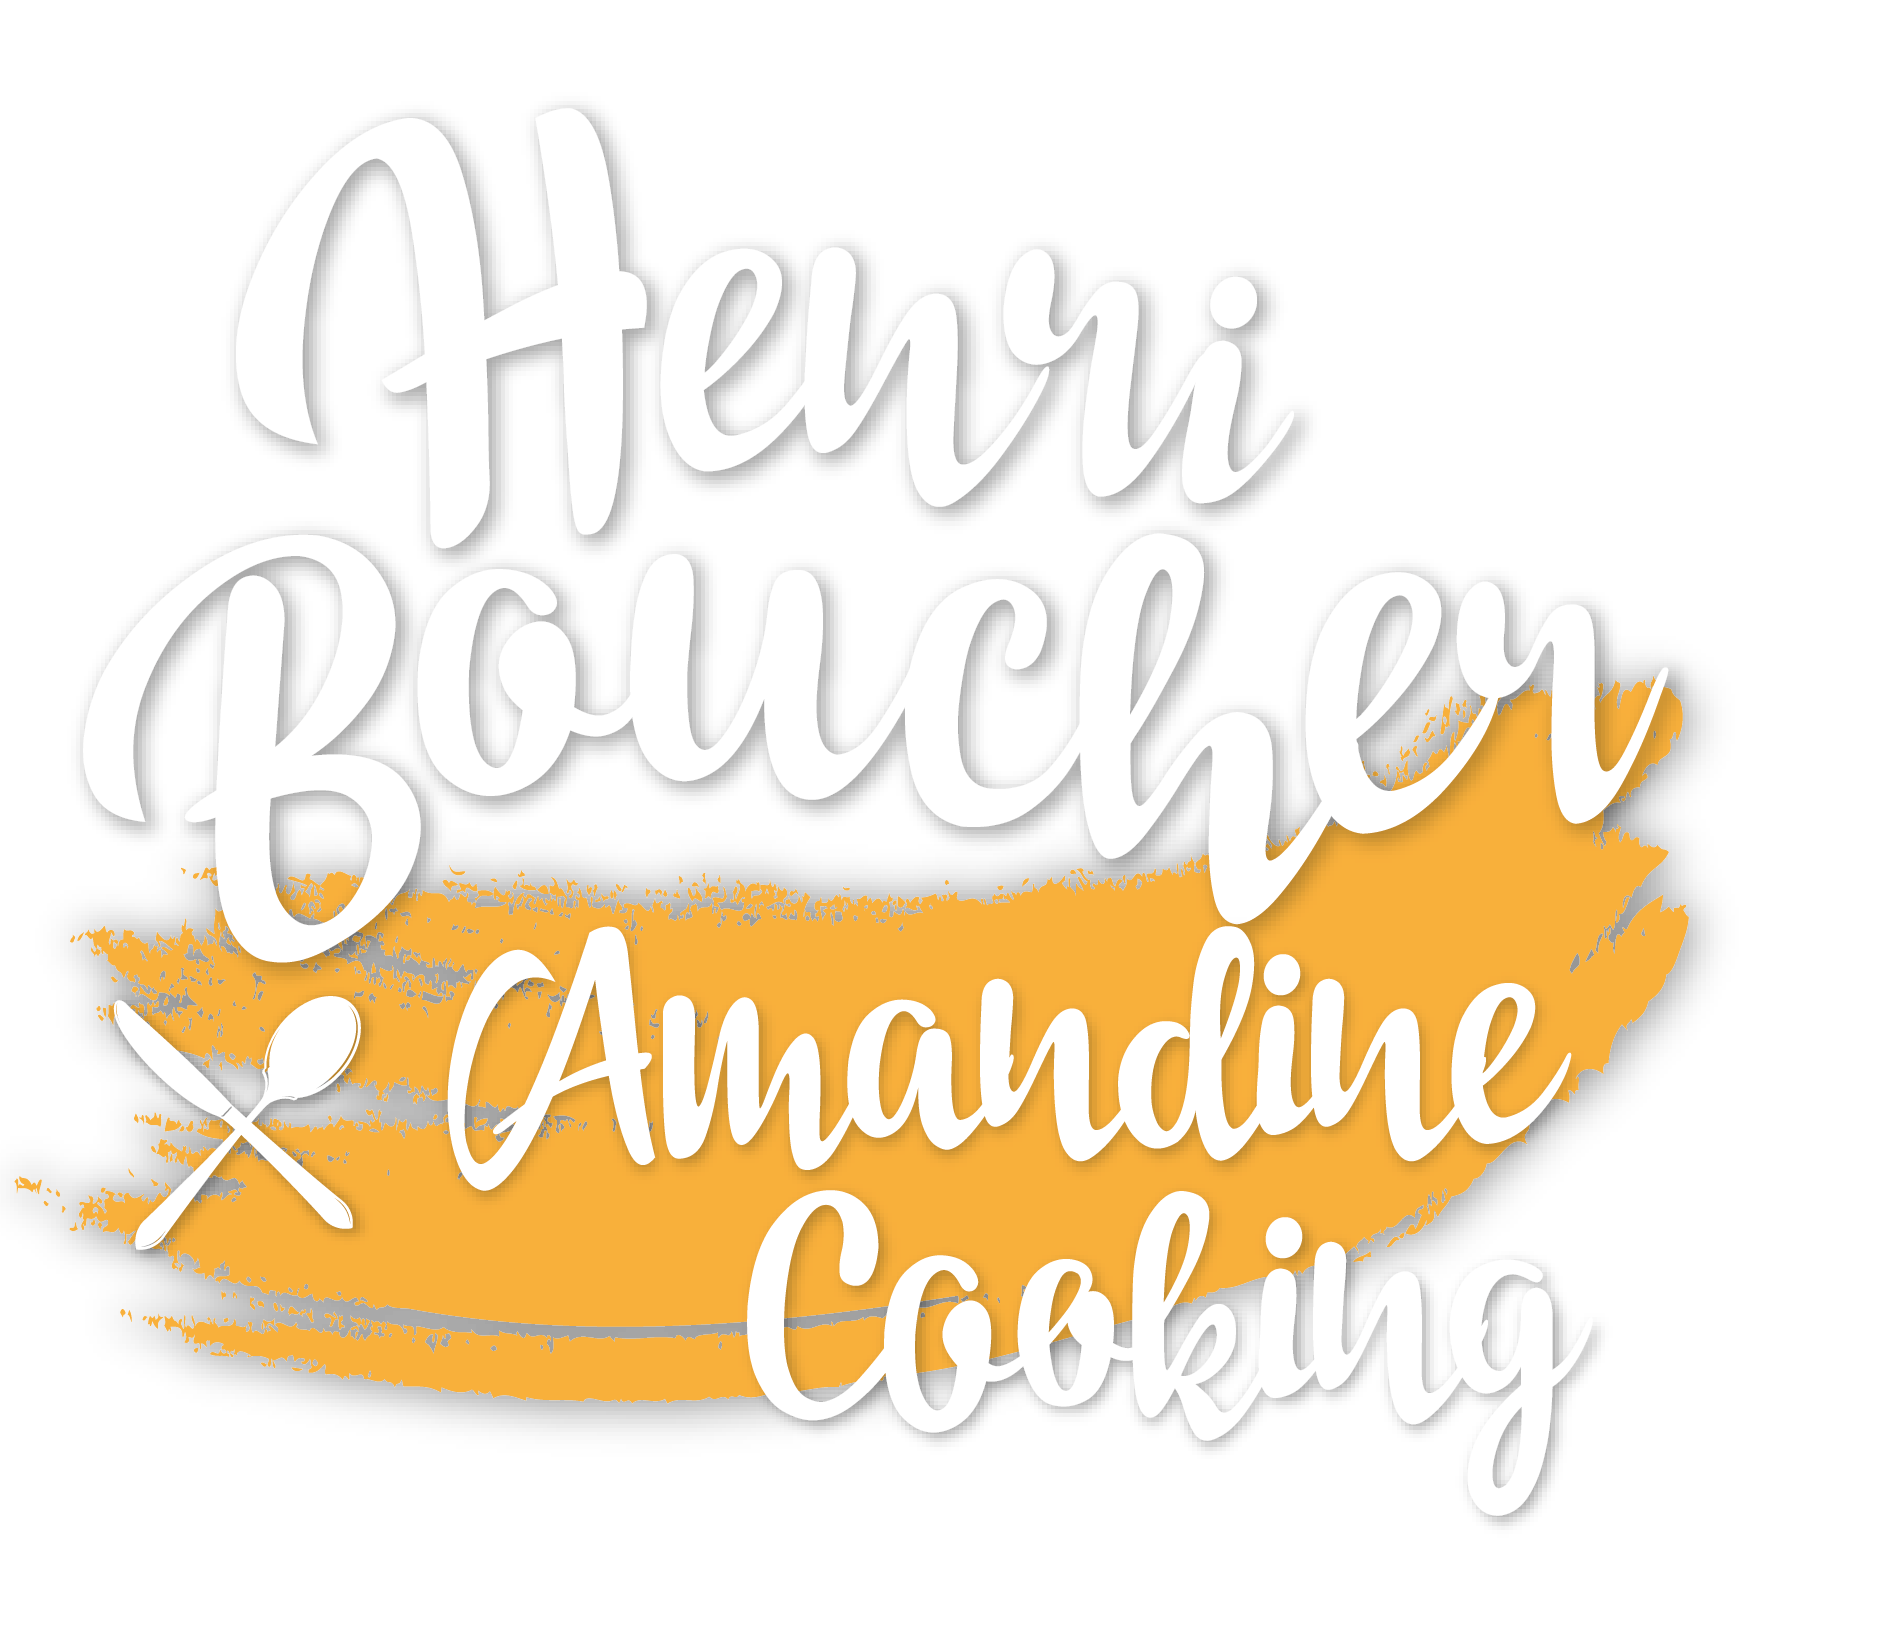 Logo Henri Boucher x Amandine Cooking